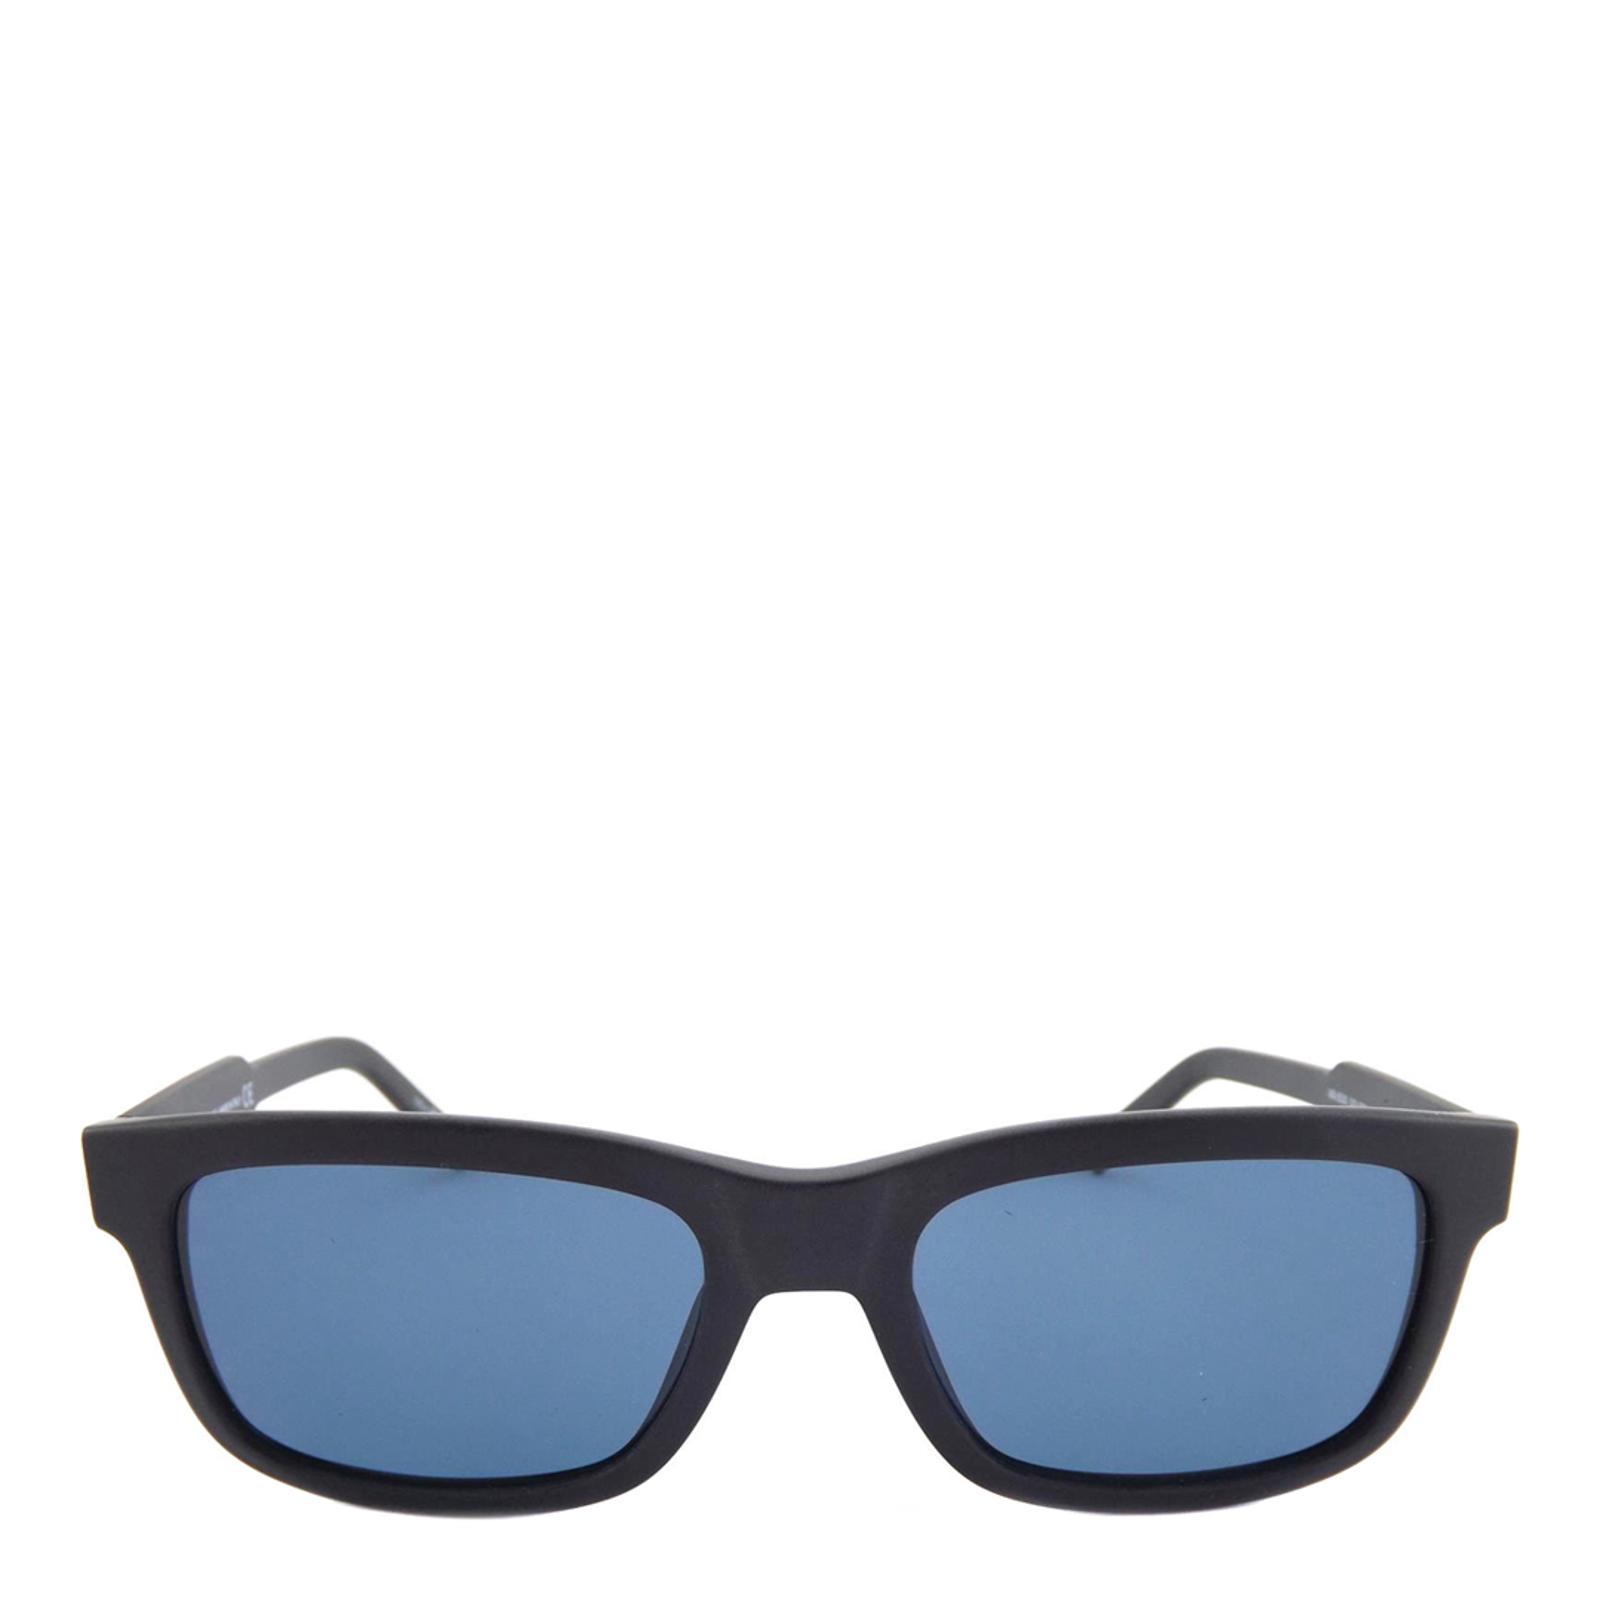 Men's Black Montblanc Sunglasses 55mm - BrandAlley